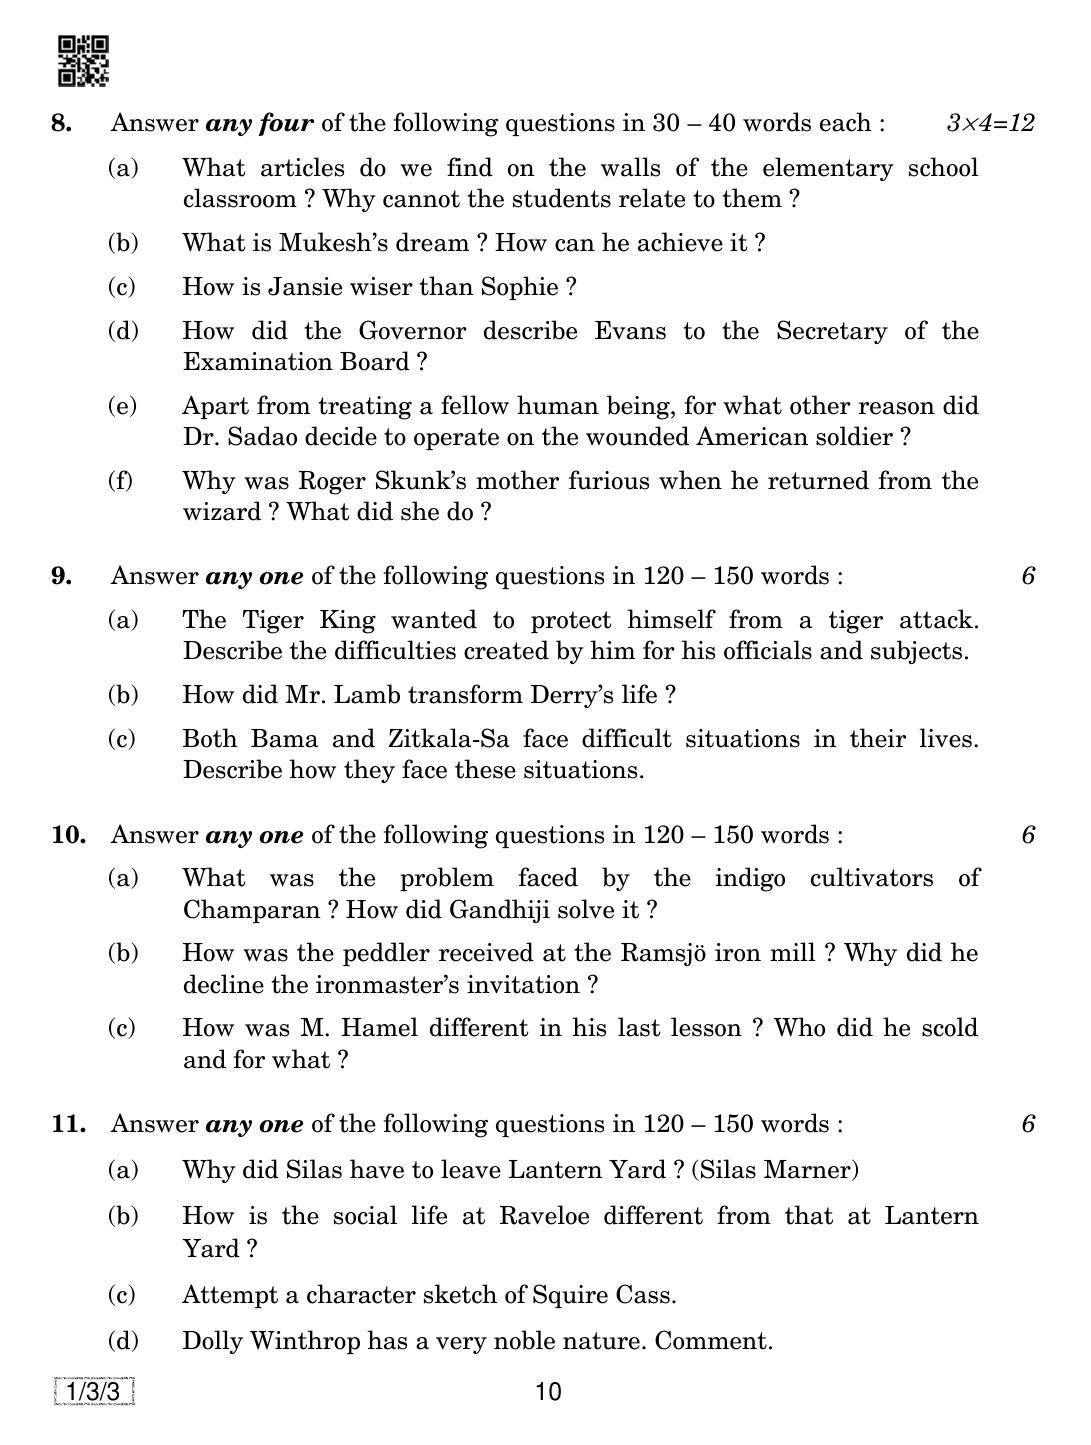 CBSE Class 12 1-3-3 English Core 2019 Question Paper - Page 10